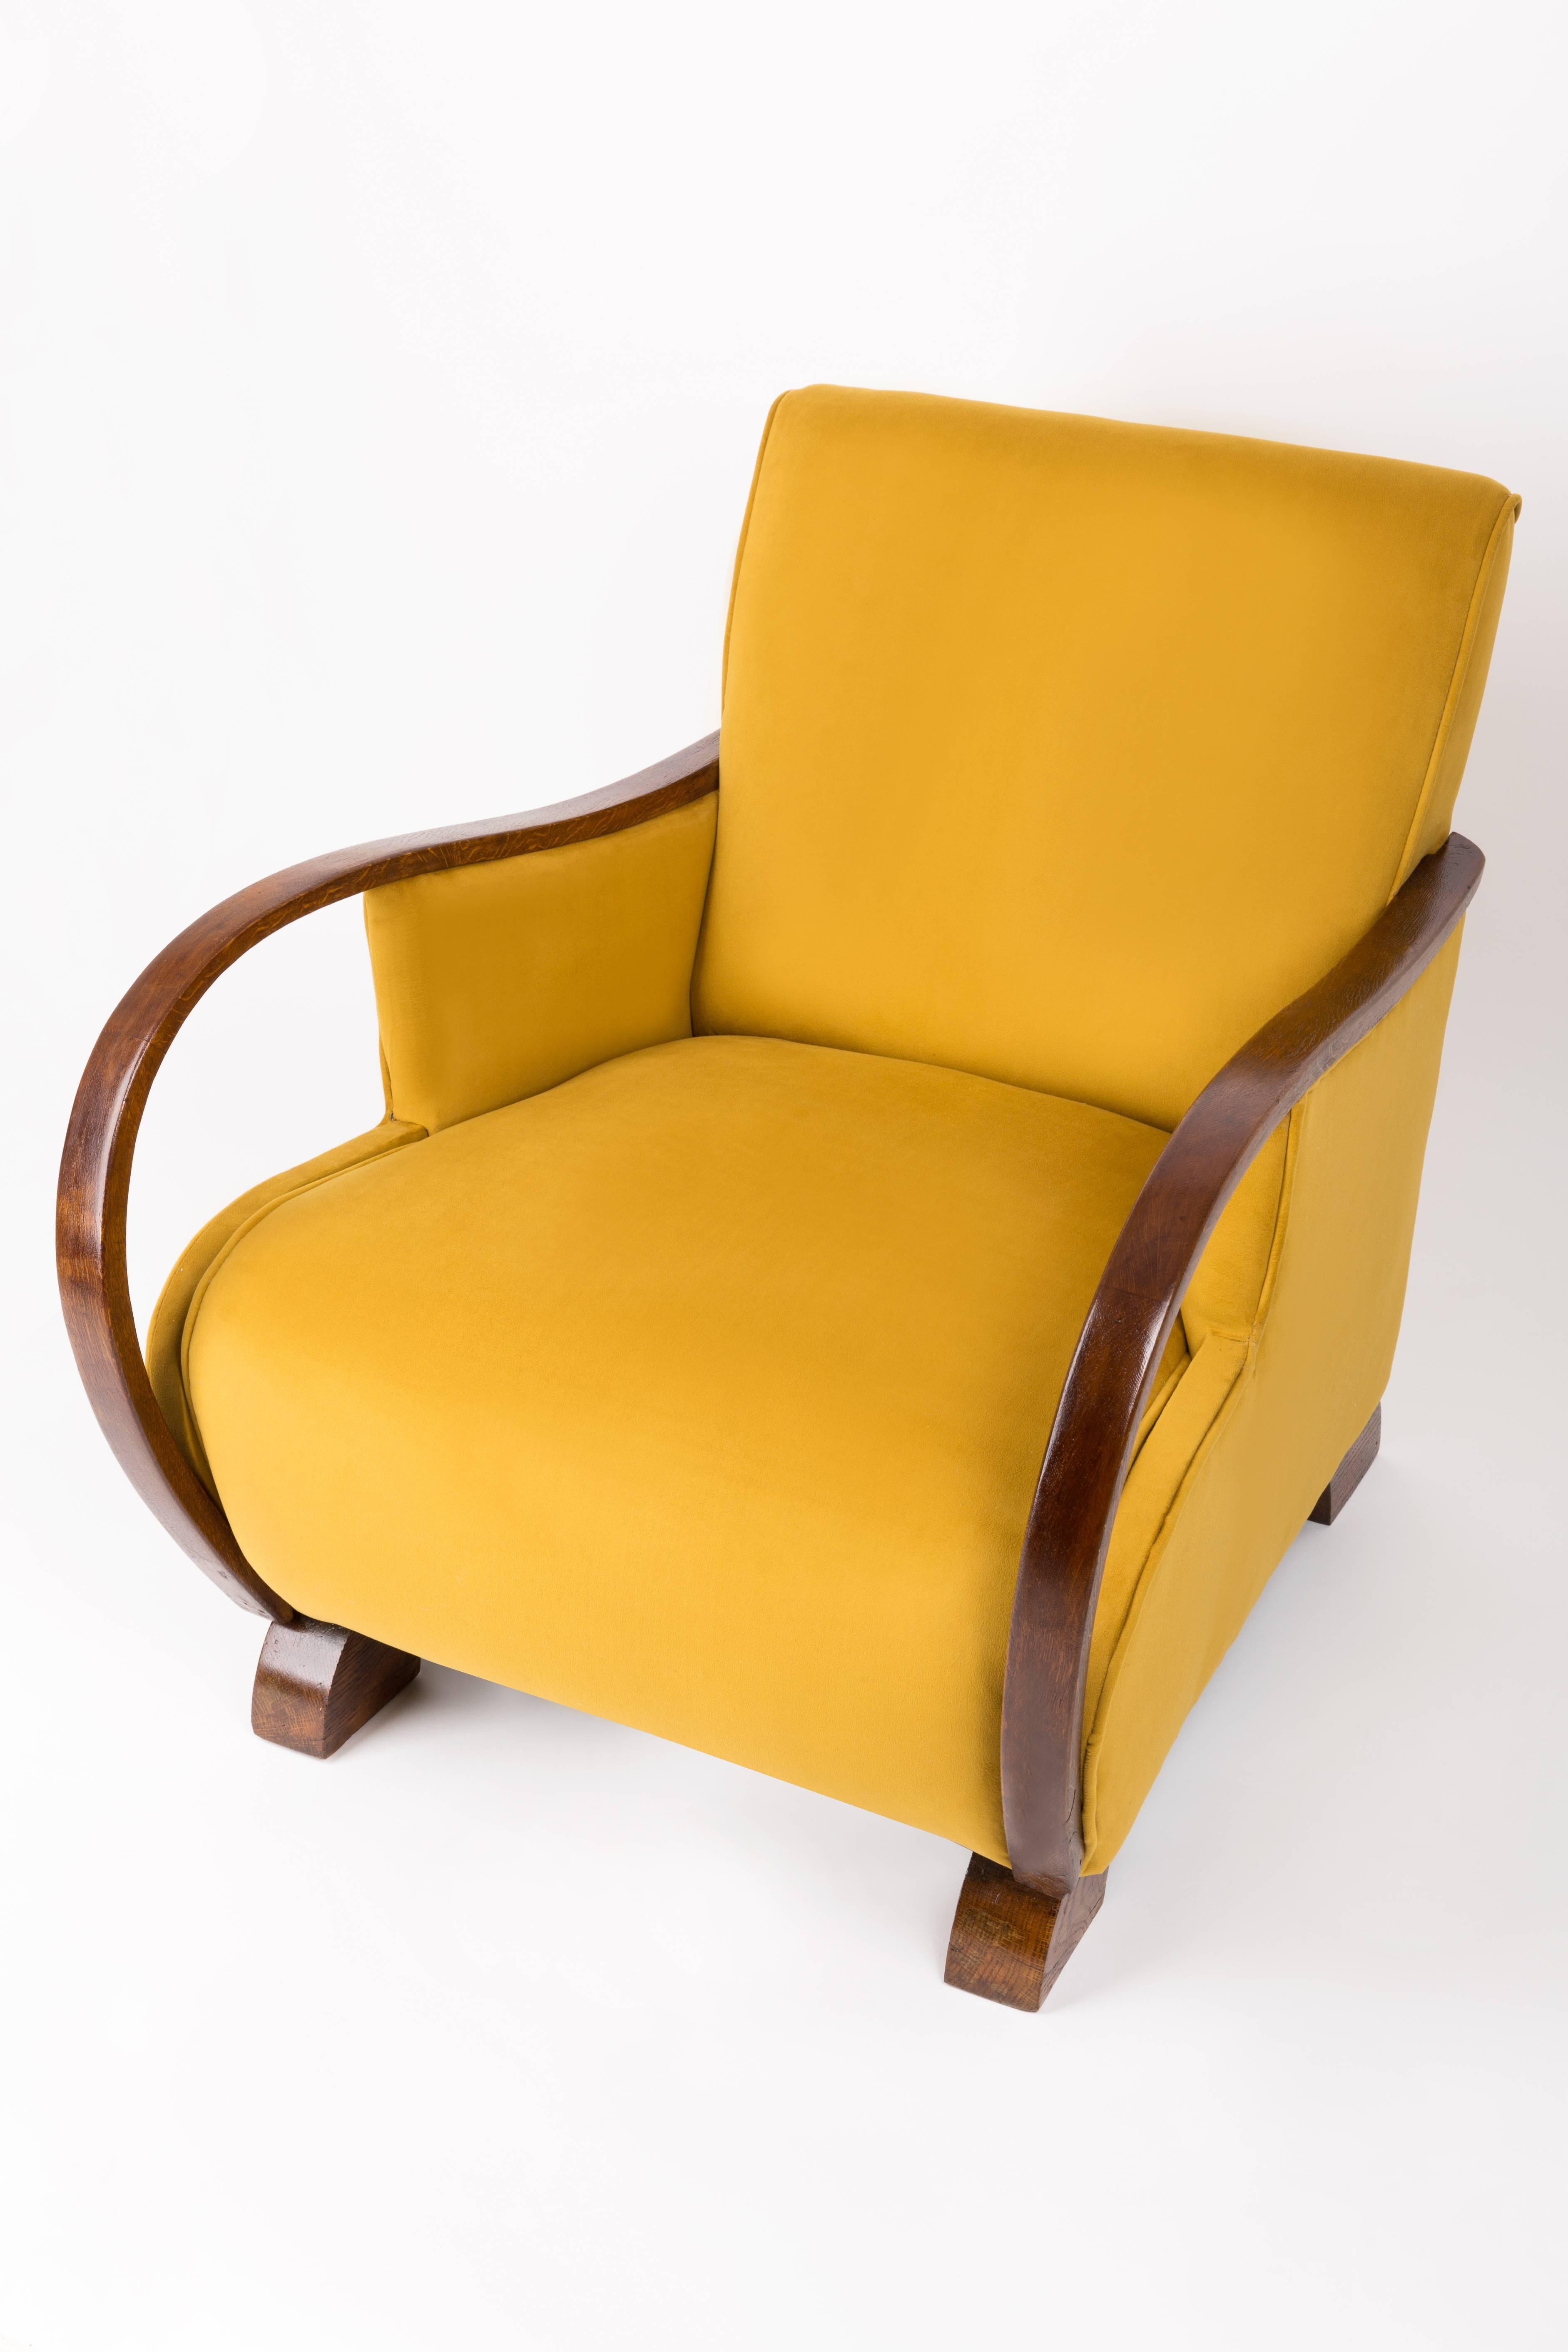 European Art Deco, Vintage Yellow Big Armchair, 1920s For Sale